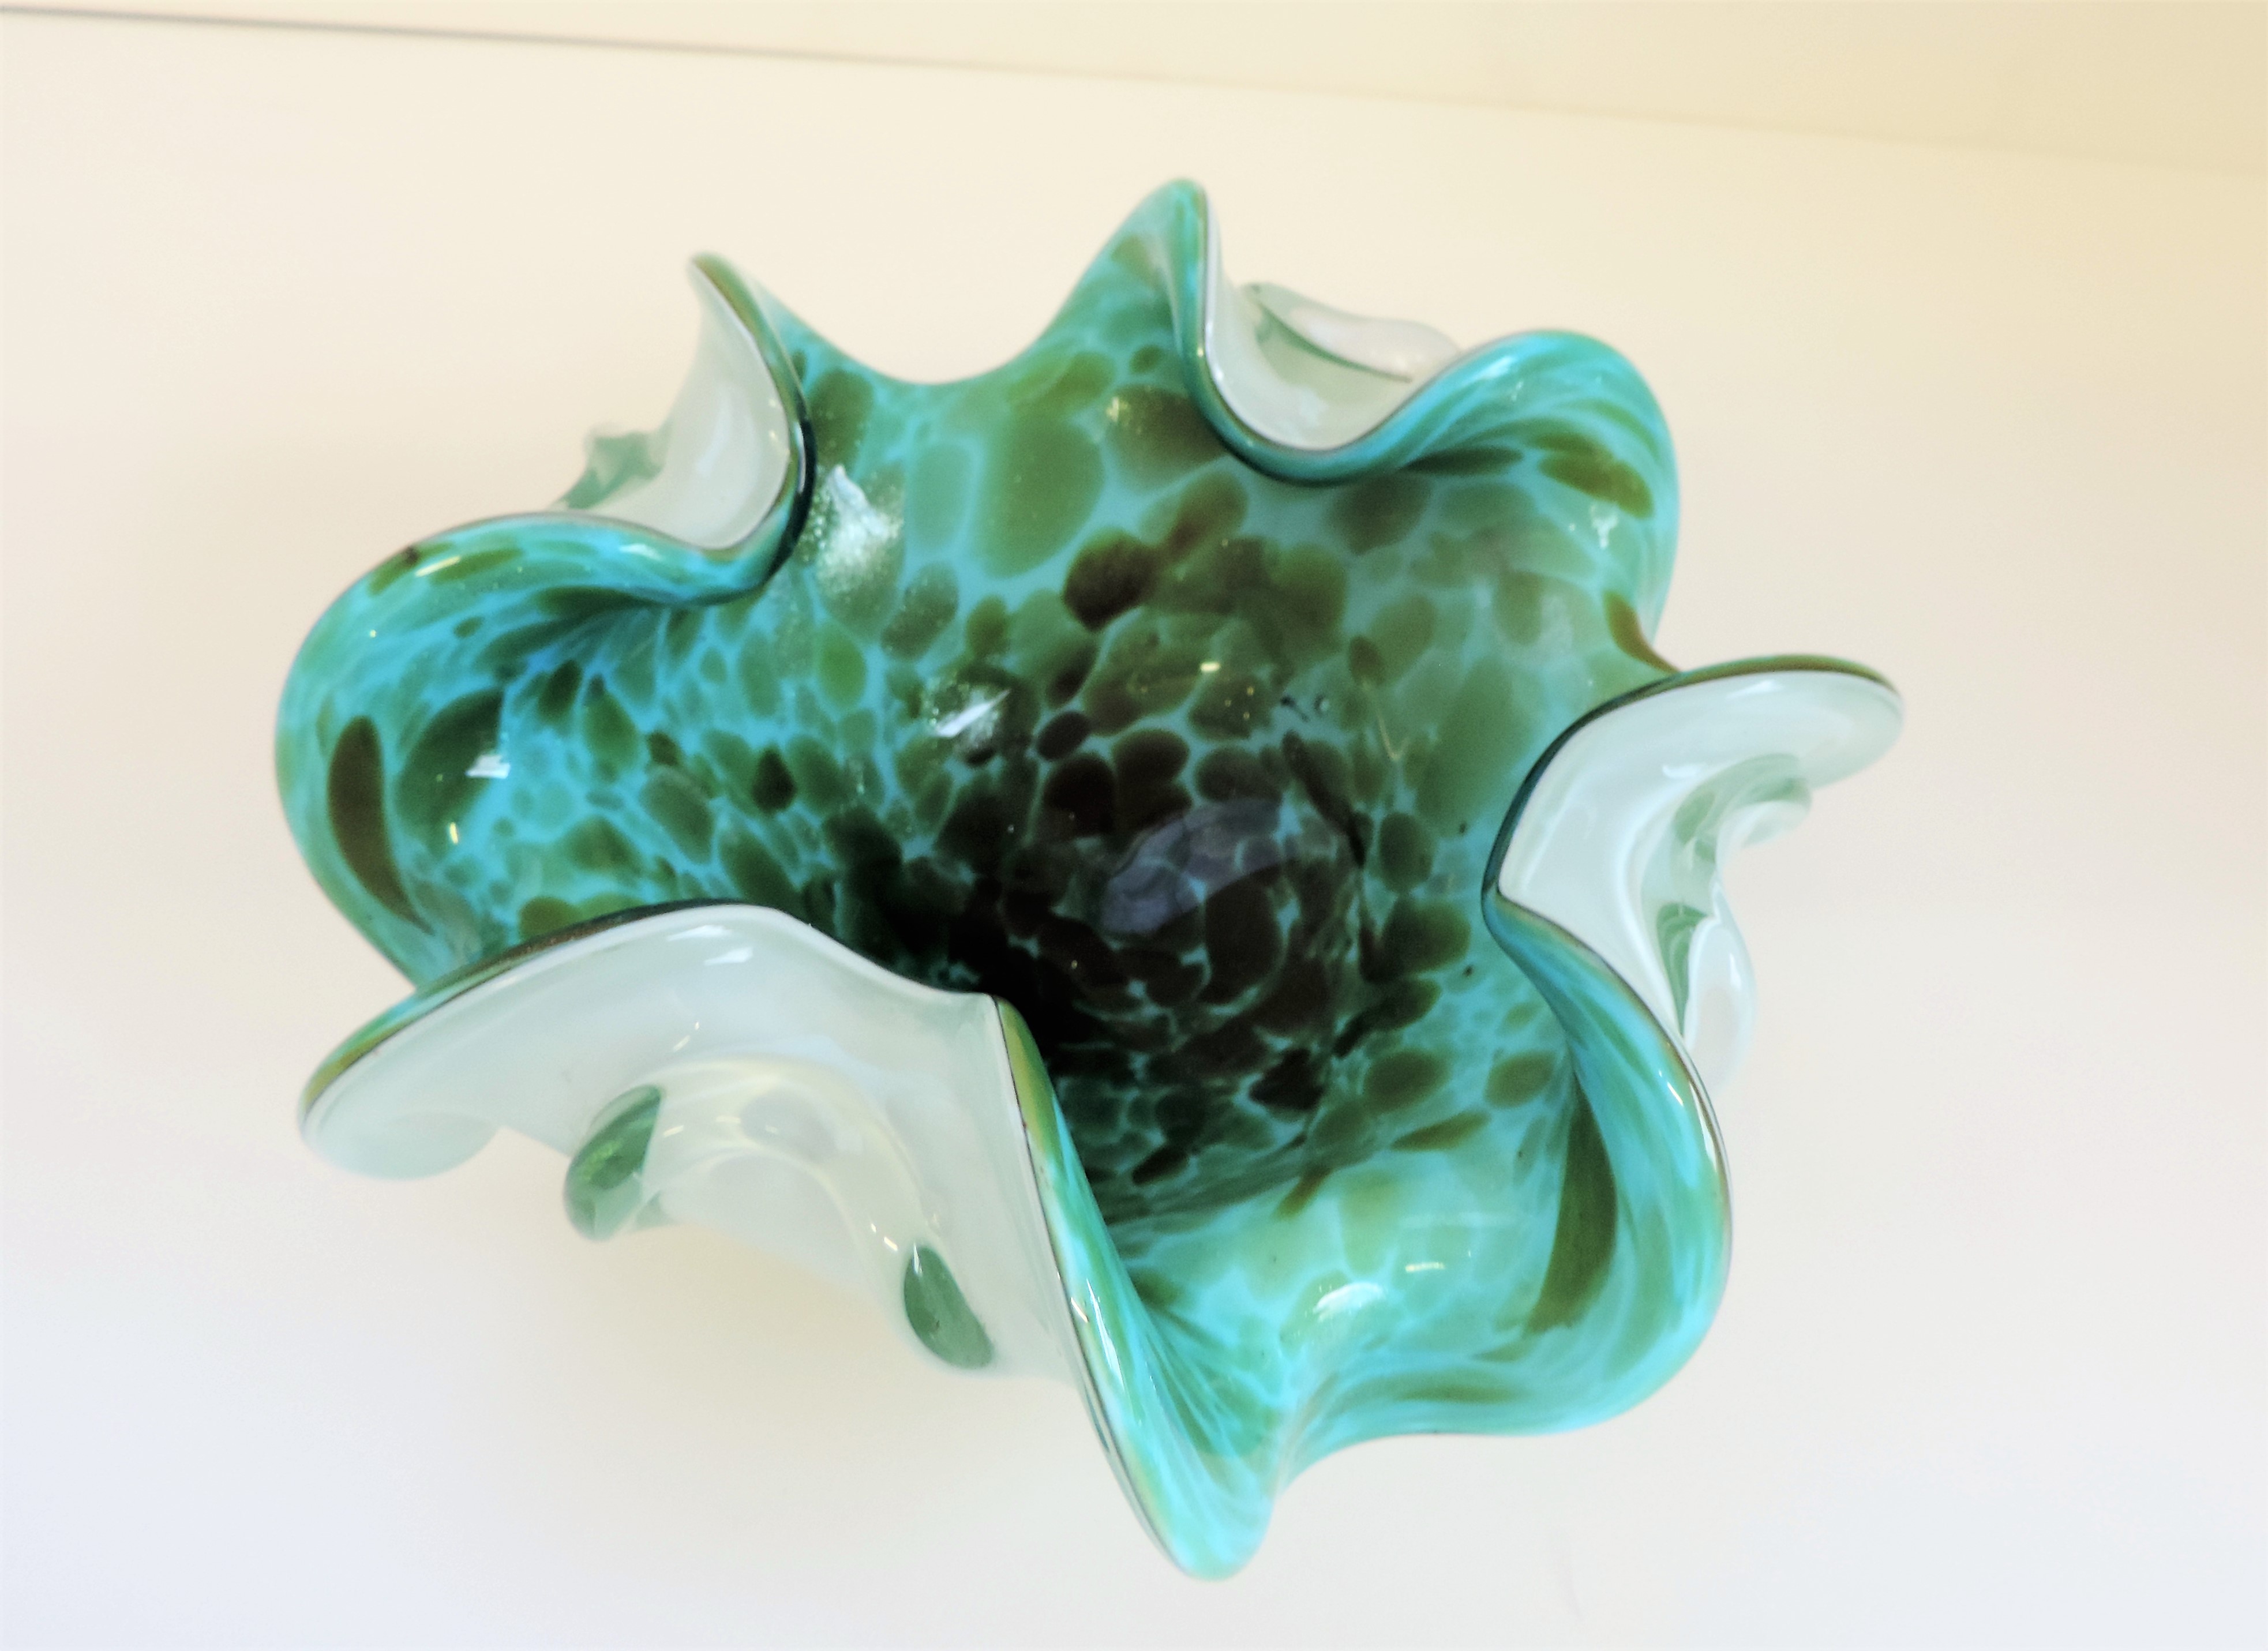 Fratelli Toso Murano Glass Biomorphic Bowl - Image 2 of 4